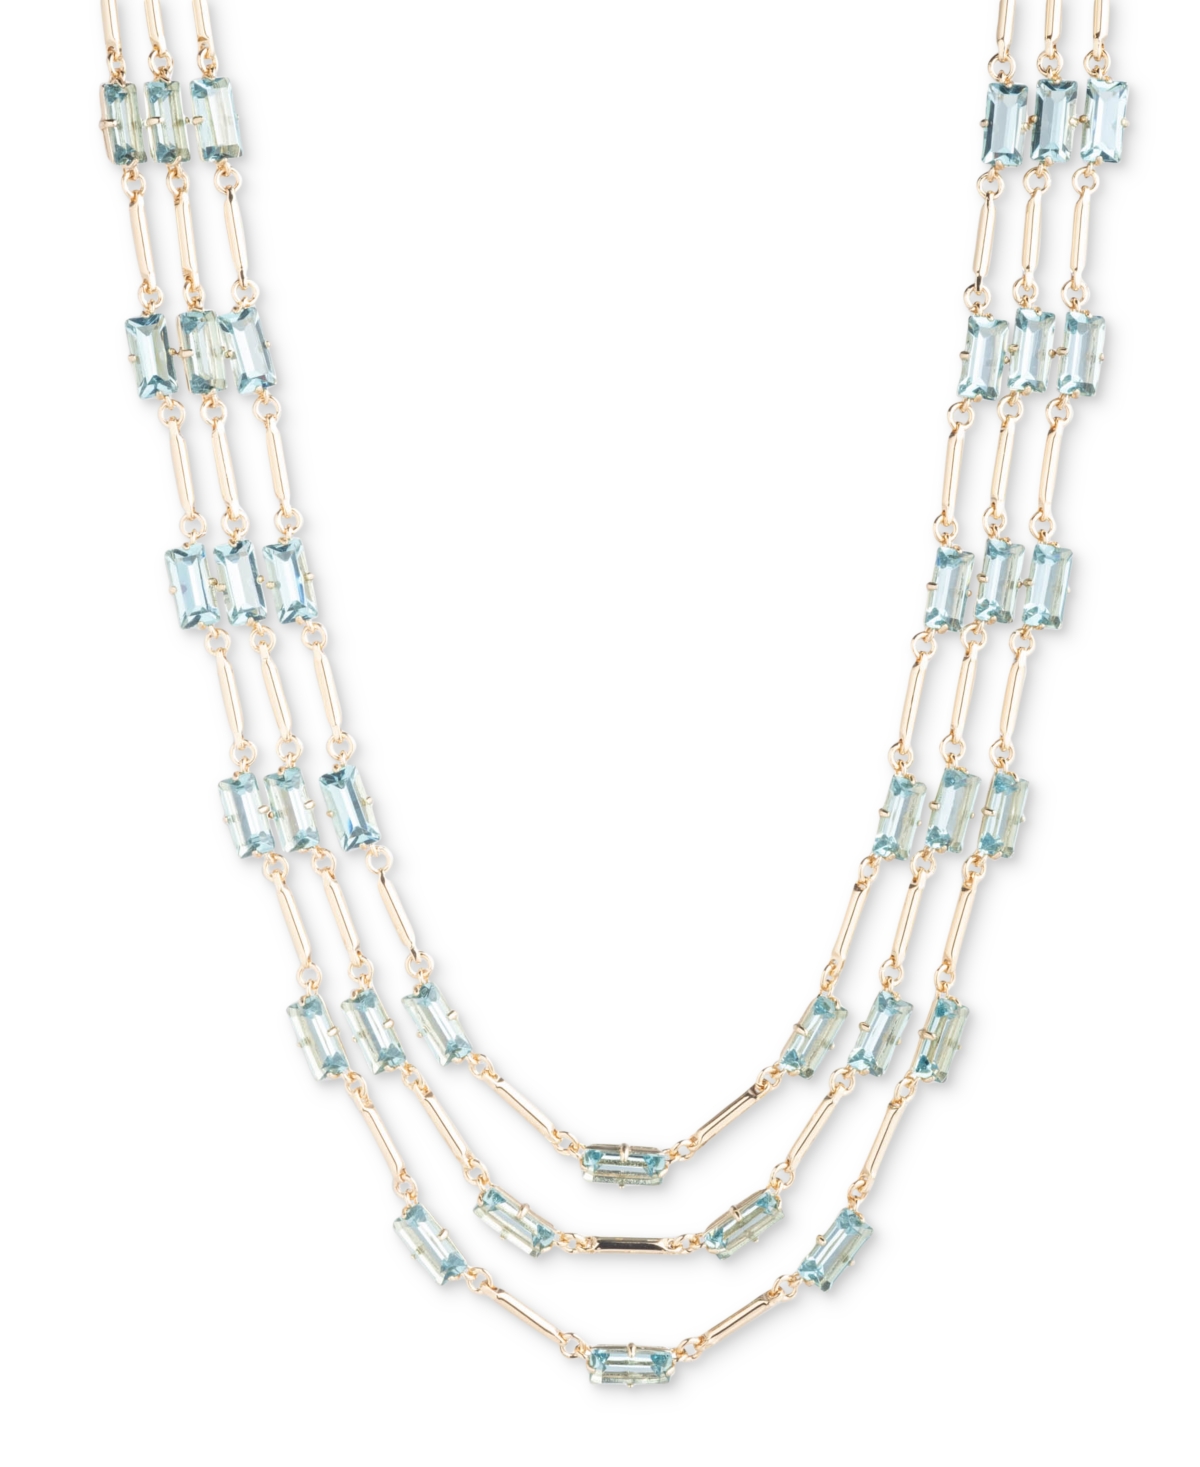 Gold-Tone Baguette Stone Layered Collar Necklace, 16" + 3" extender - Aqua Blue